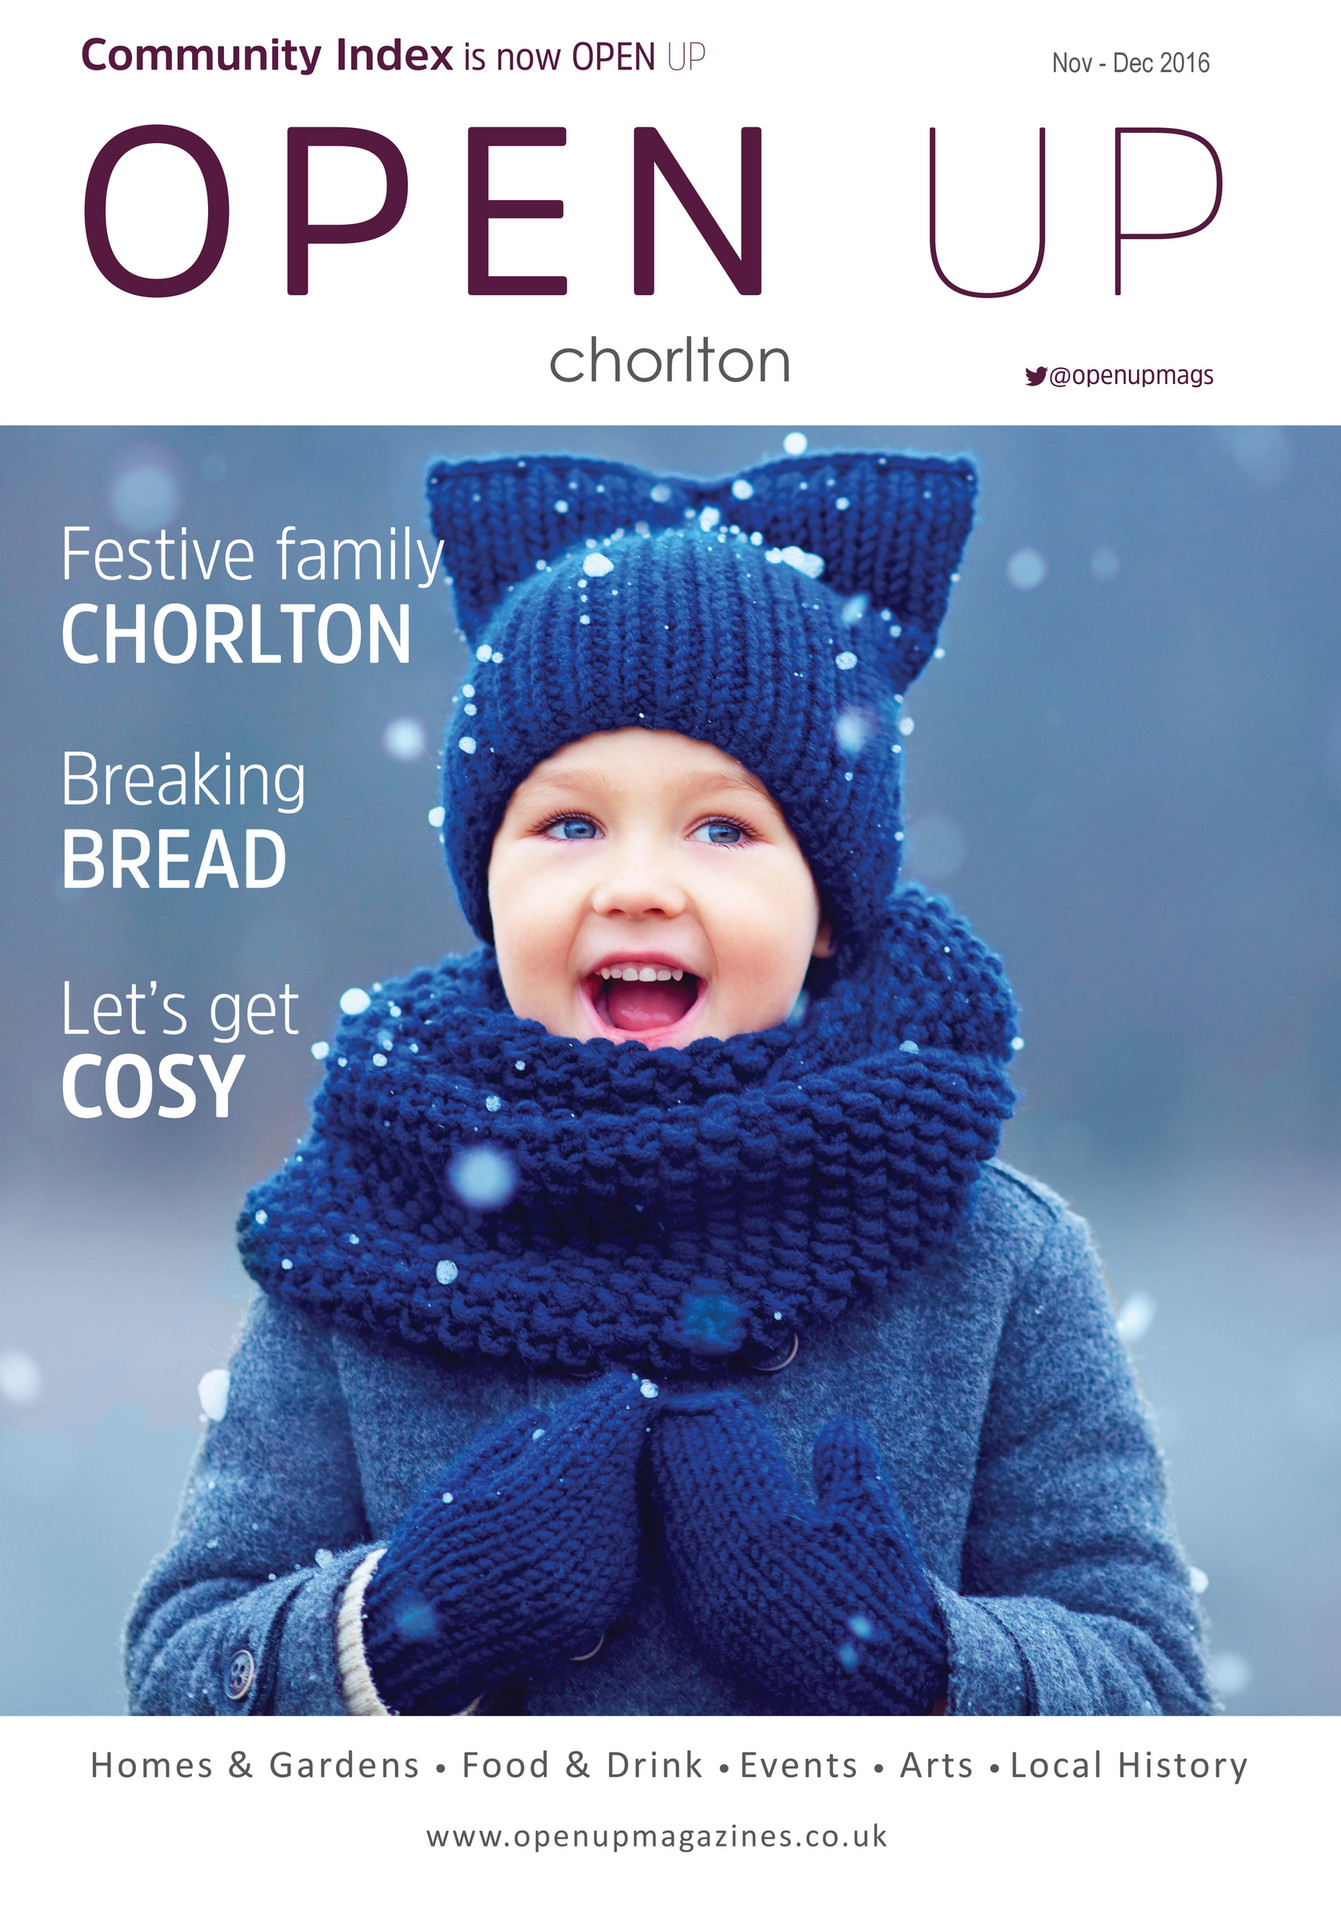 Open Up Magazines 201611&12 Open Up Chorlton Page 1011 Created